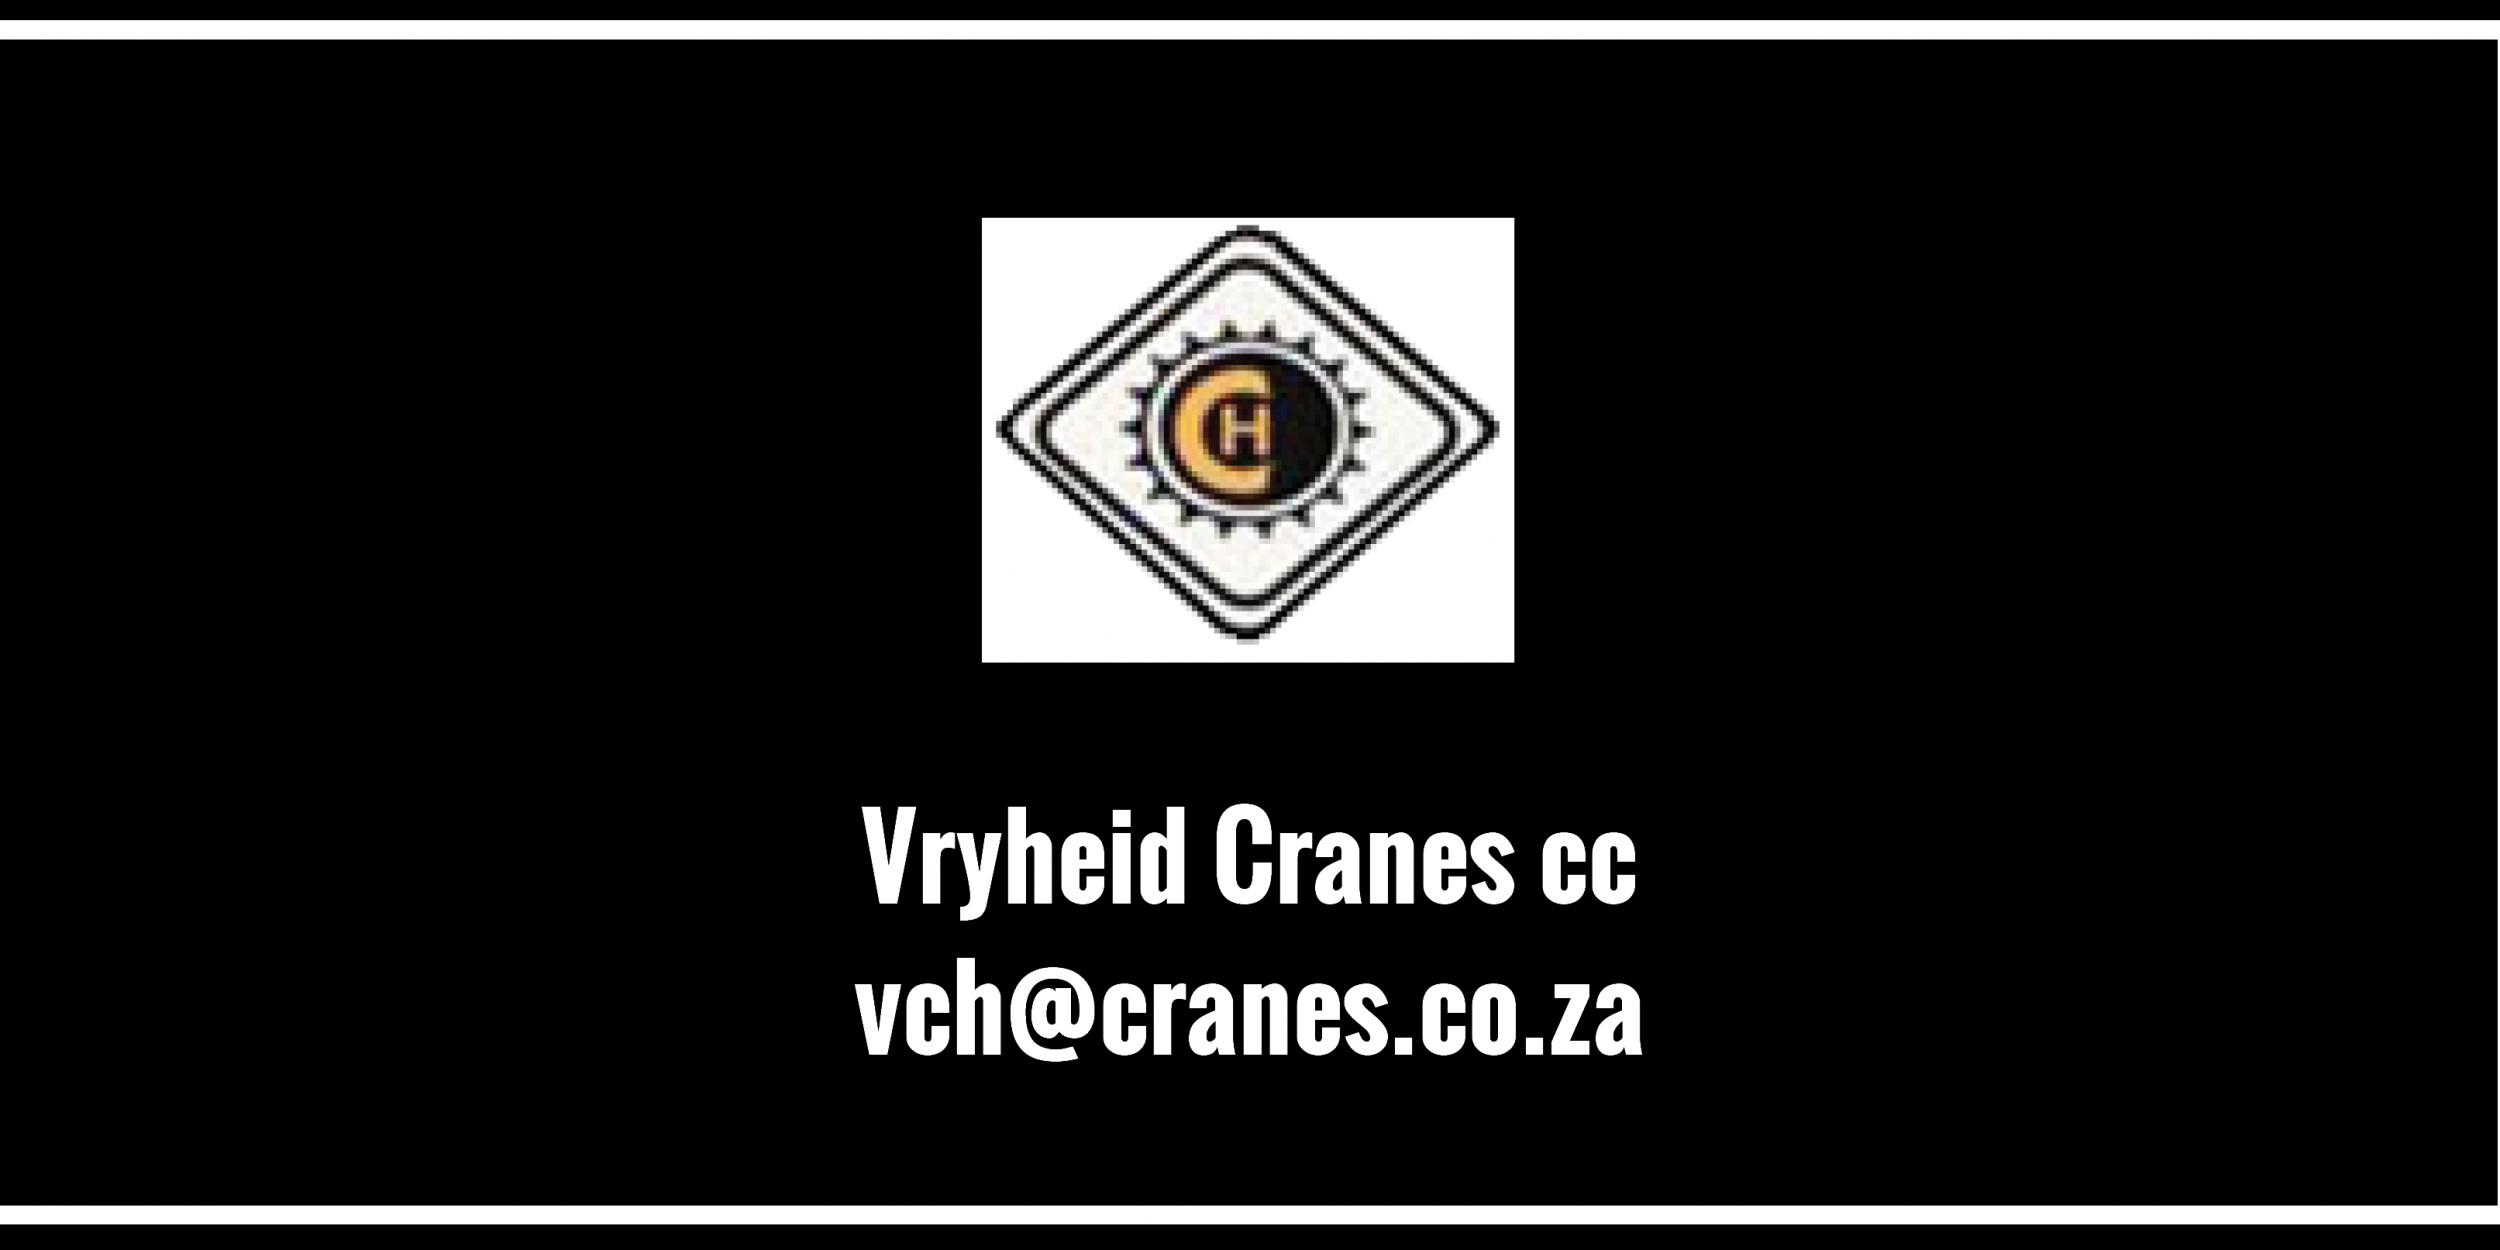 Vryheid Cranes cc